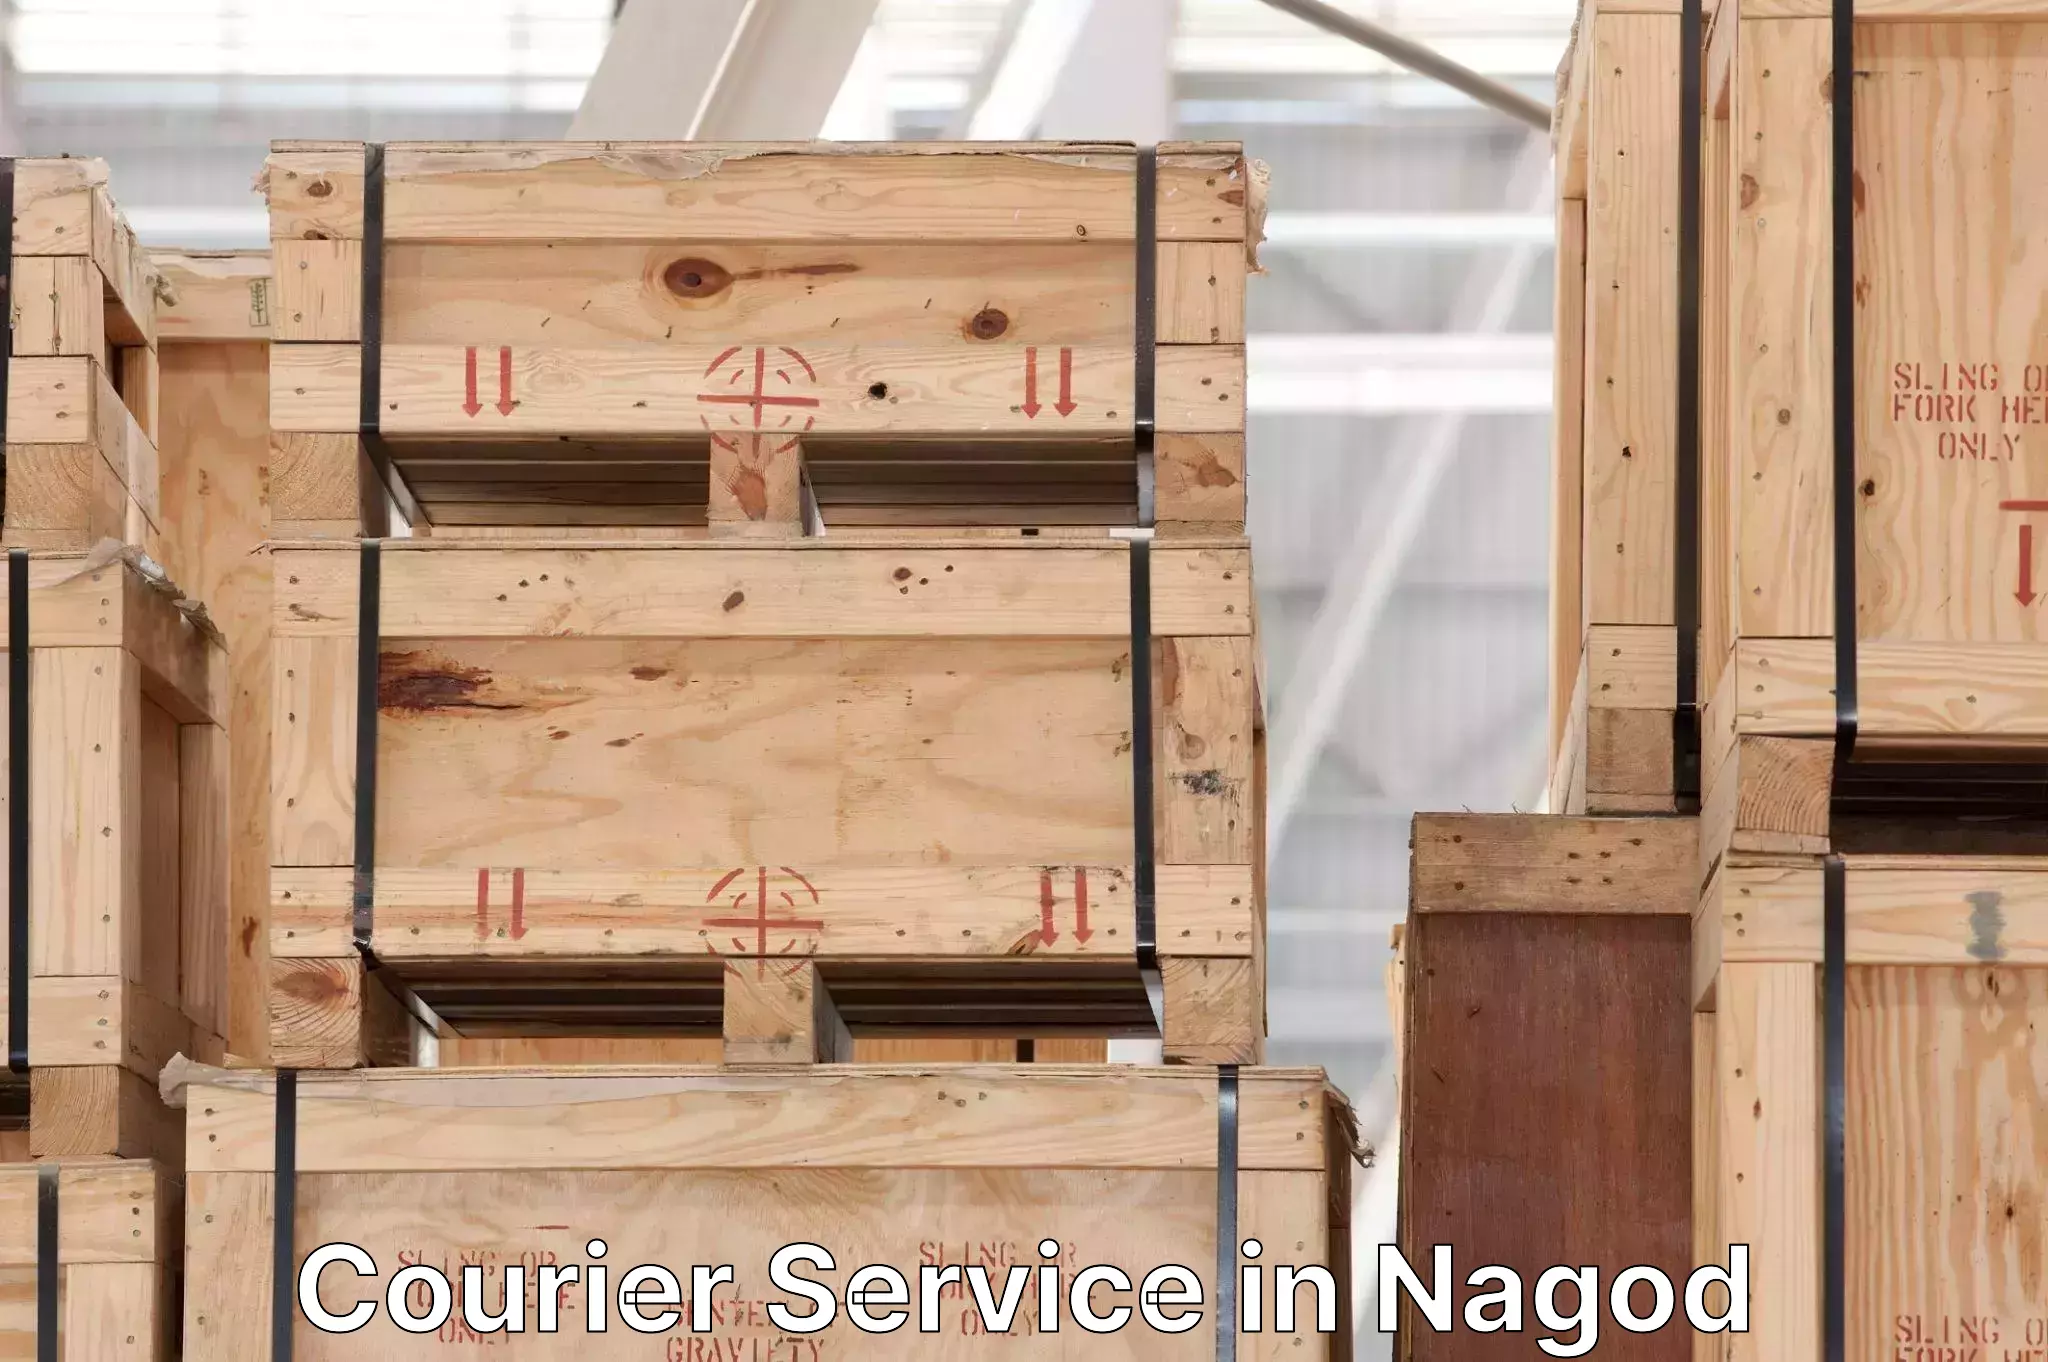 Delivery service partnership in Nagod